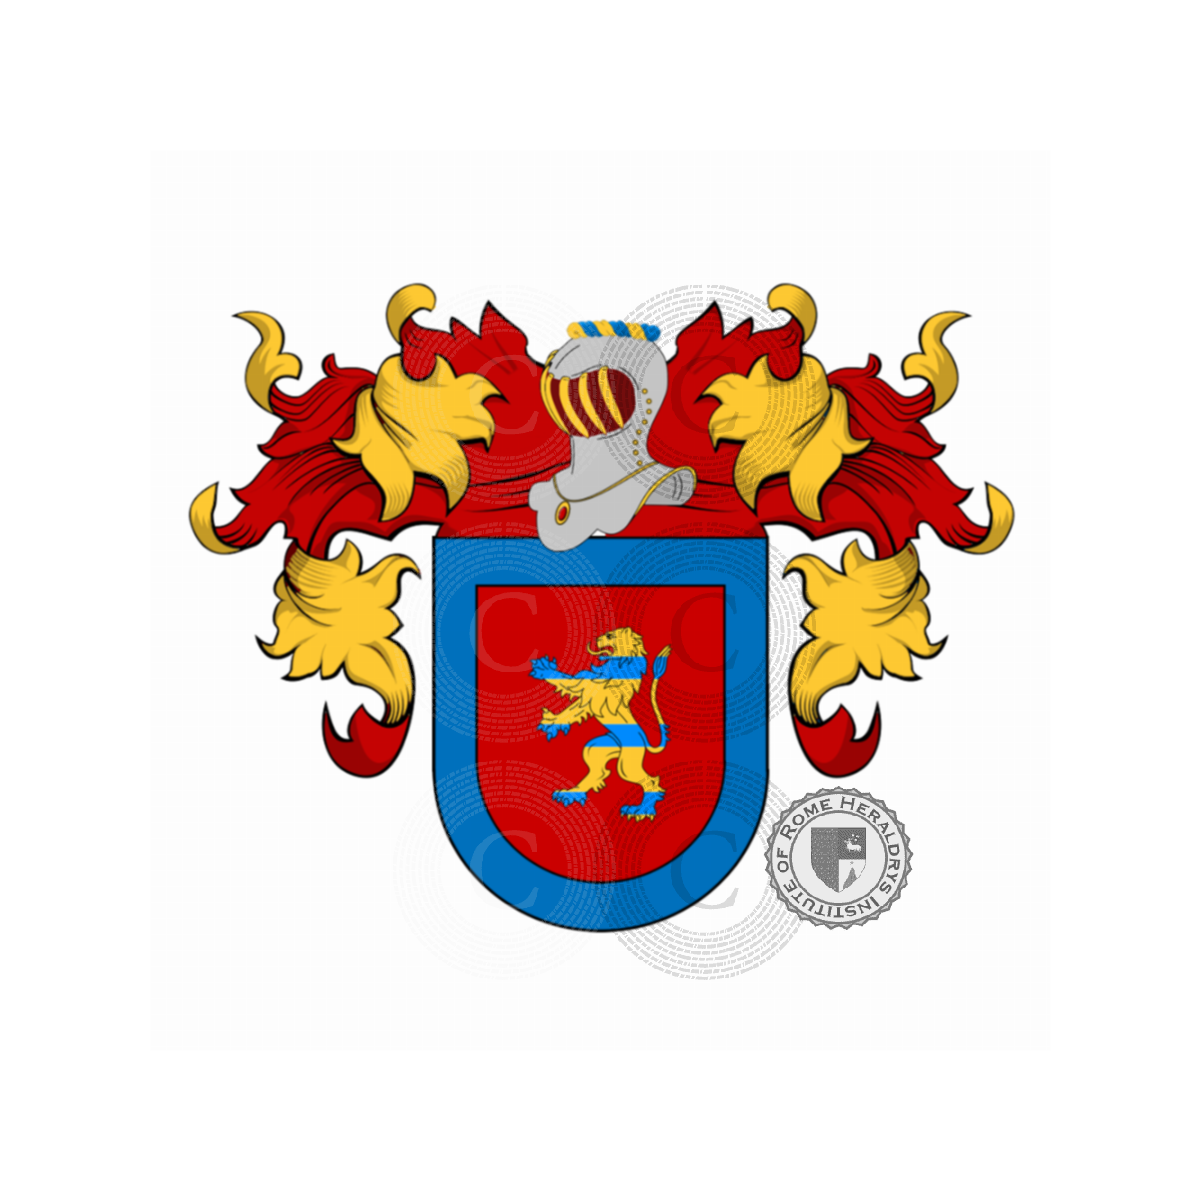 Coat of arms of familyAmador, Amado